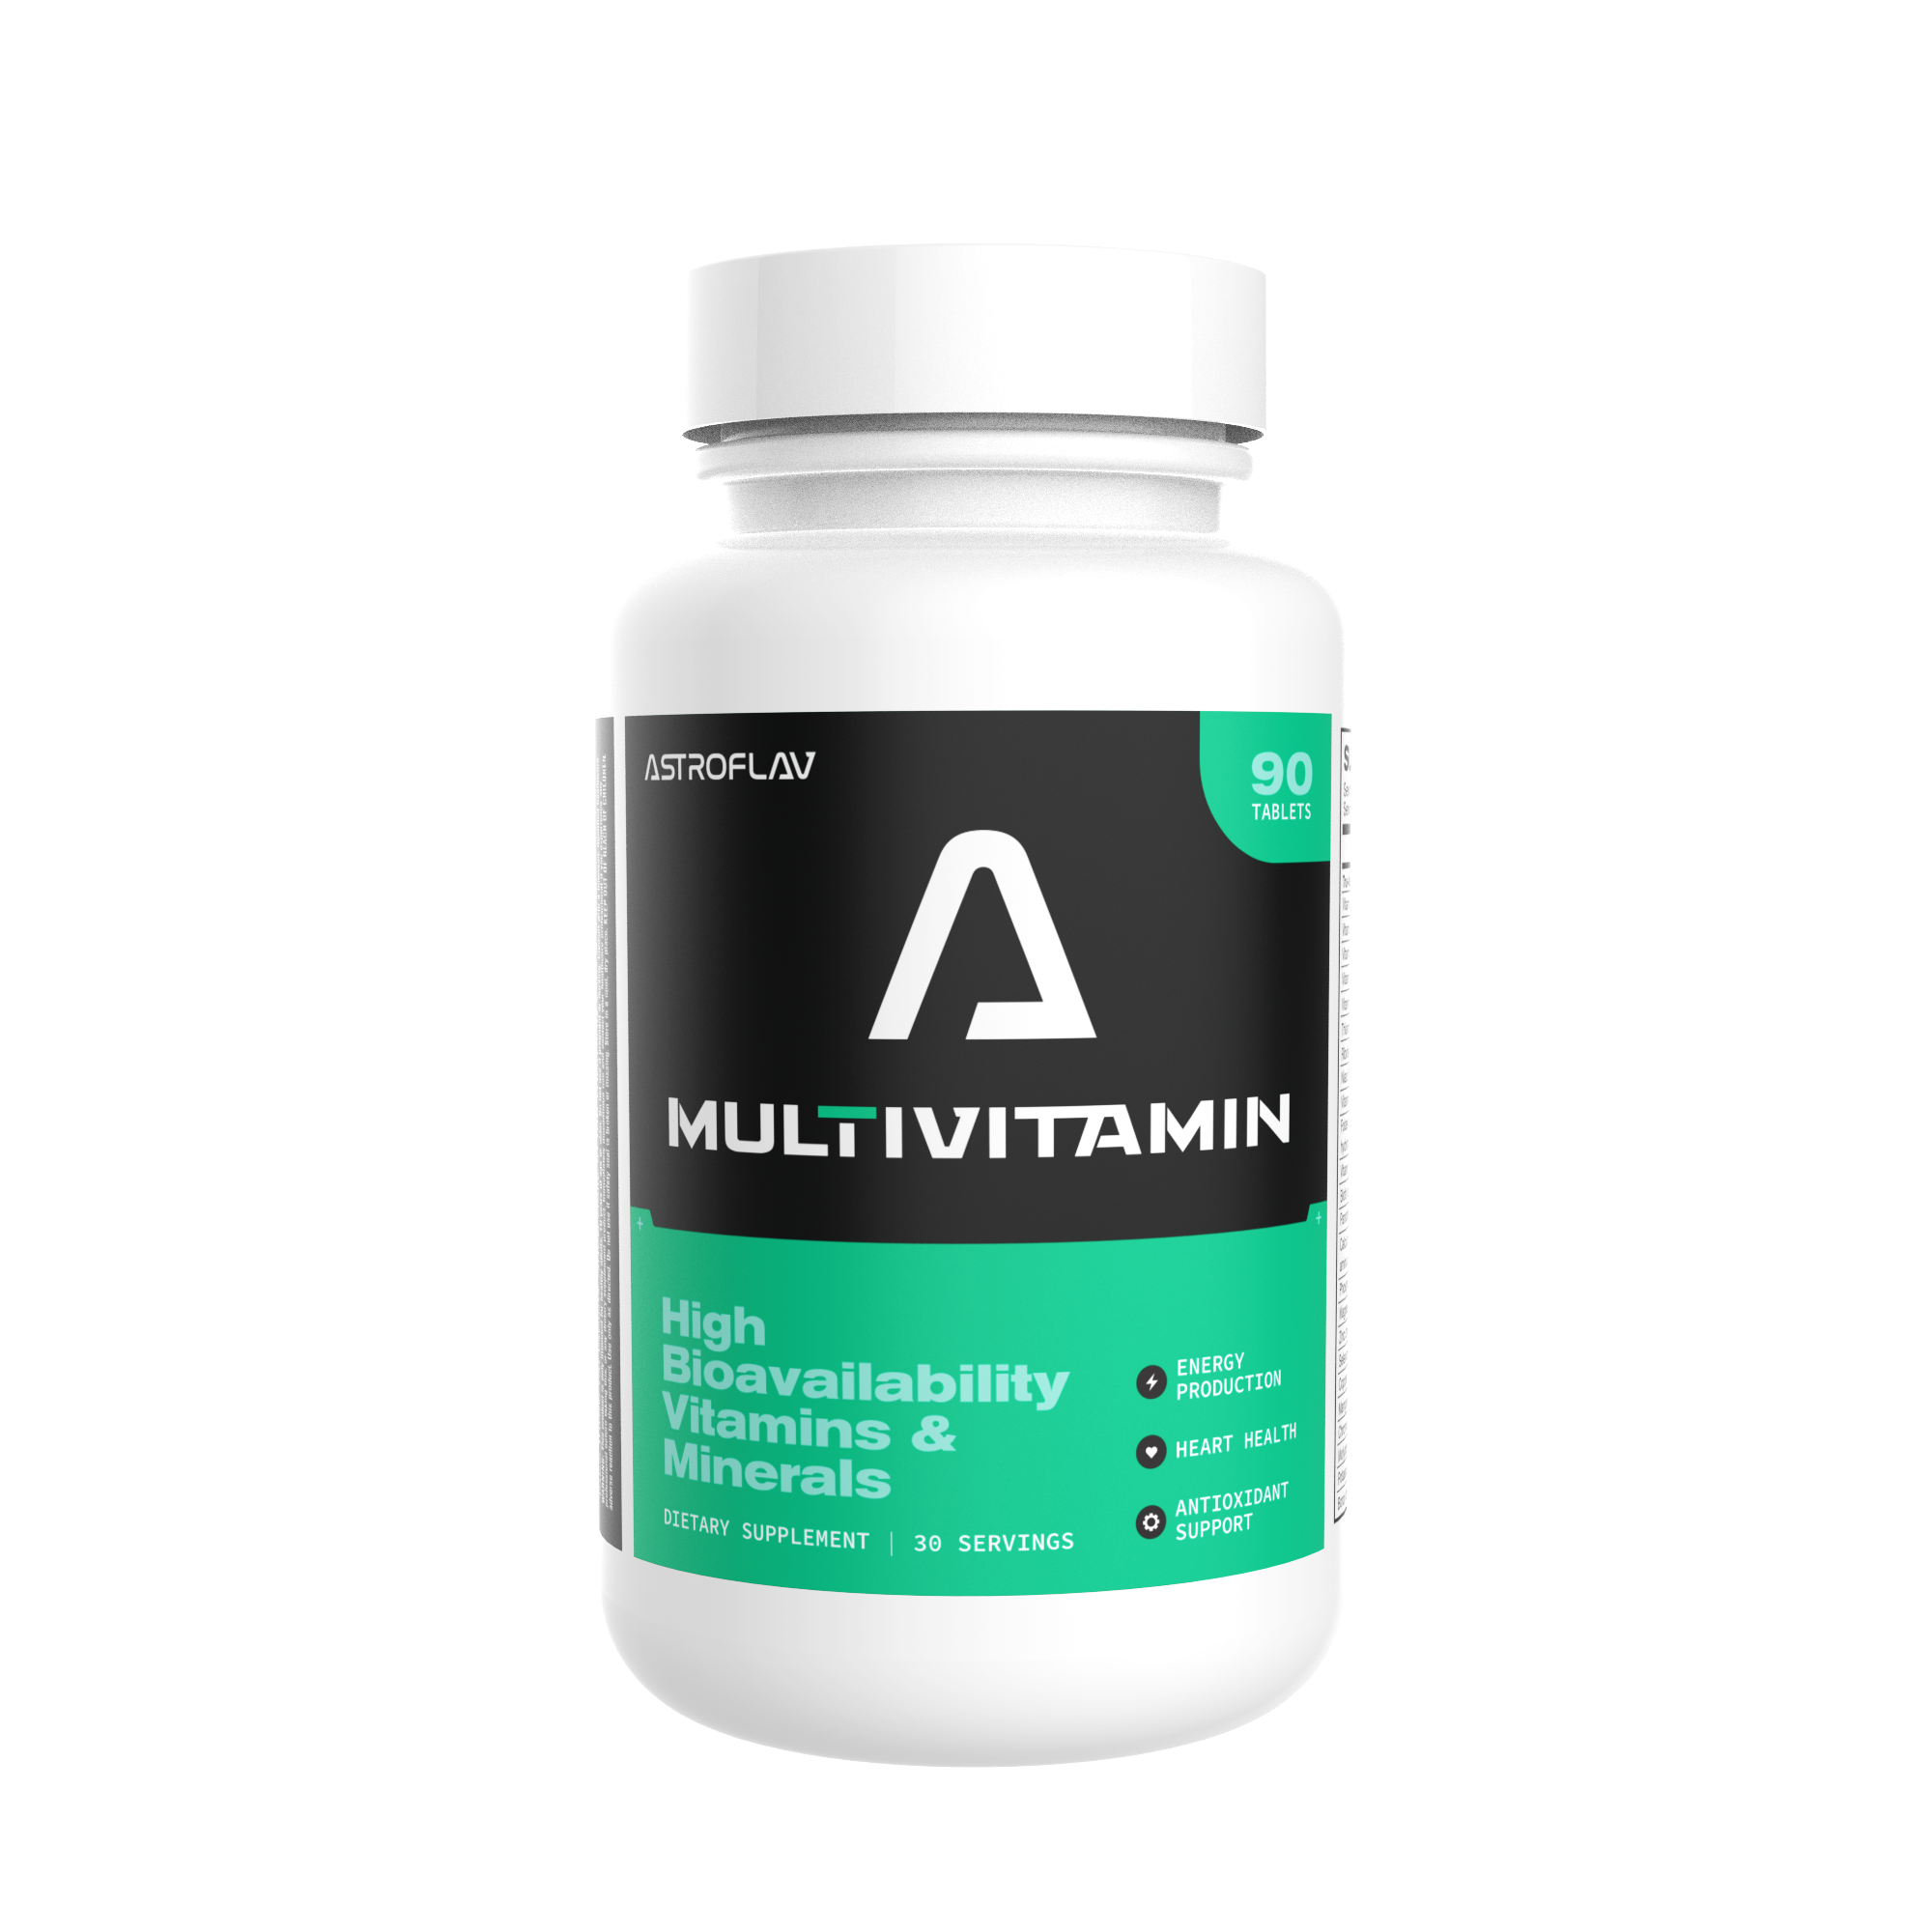 Multivitamin | High Bioavailability Vitamins & Minerals